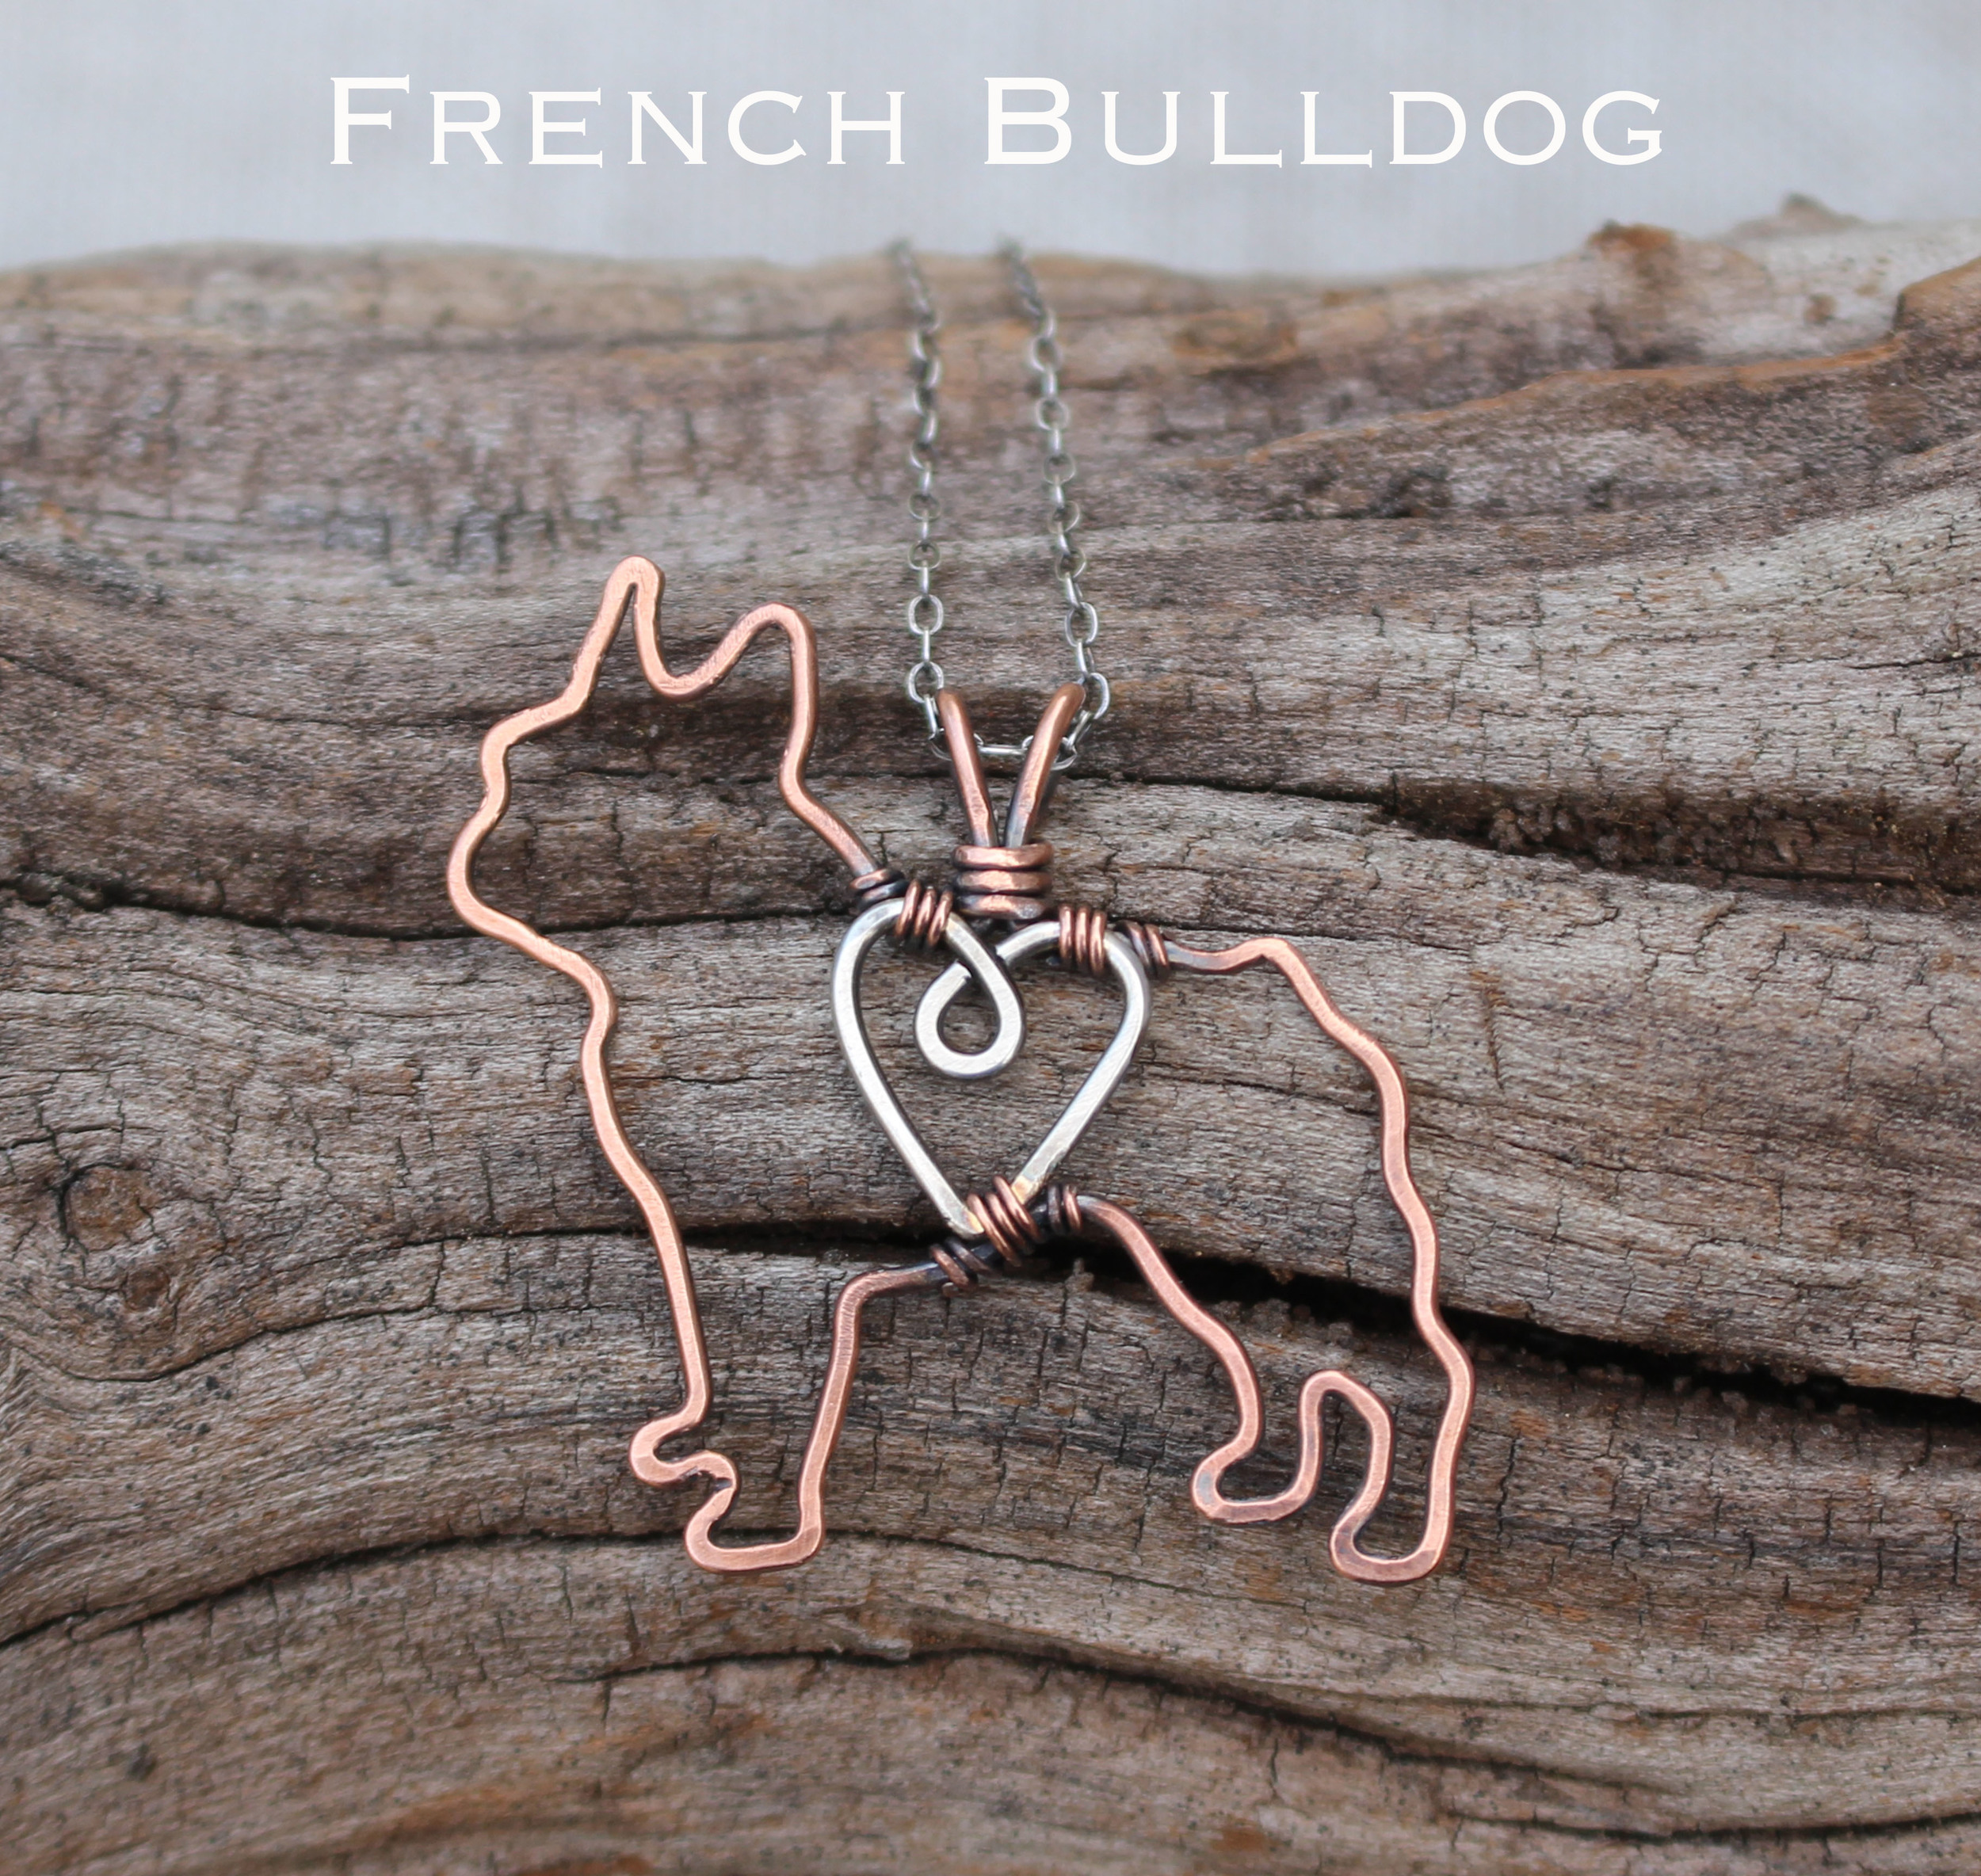 french bulldog2.jpg